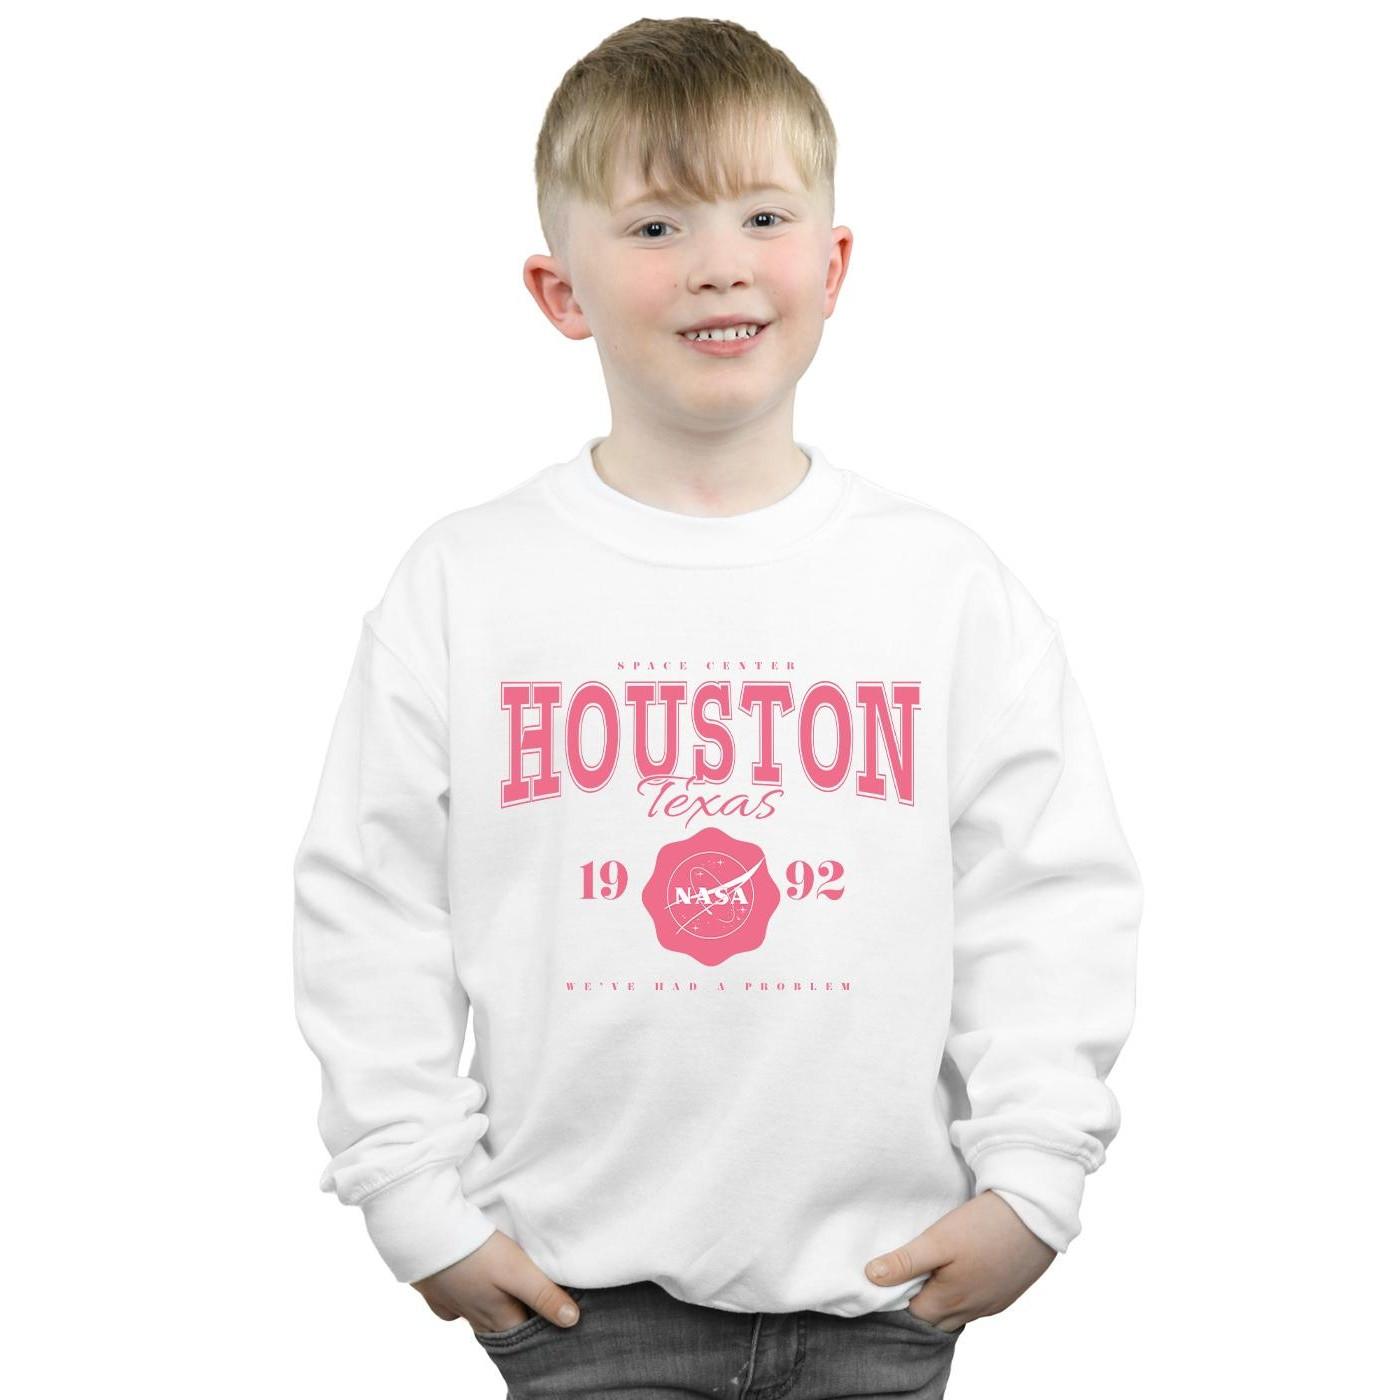 Nasa  Houston We've Had A Problem Sweatshirt 